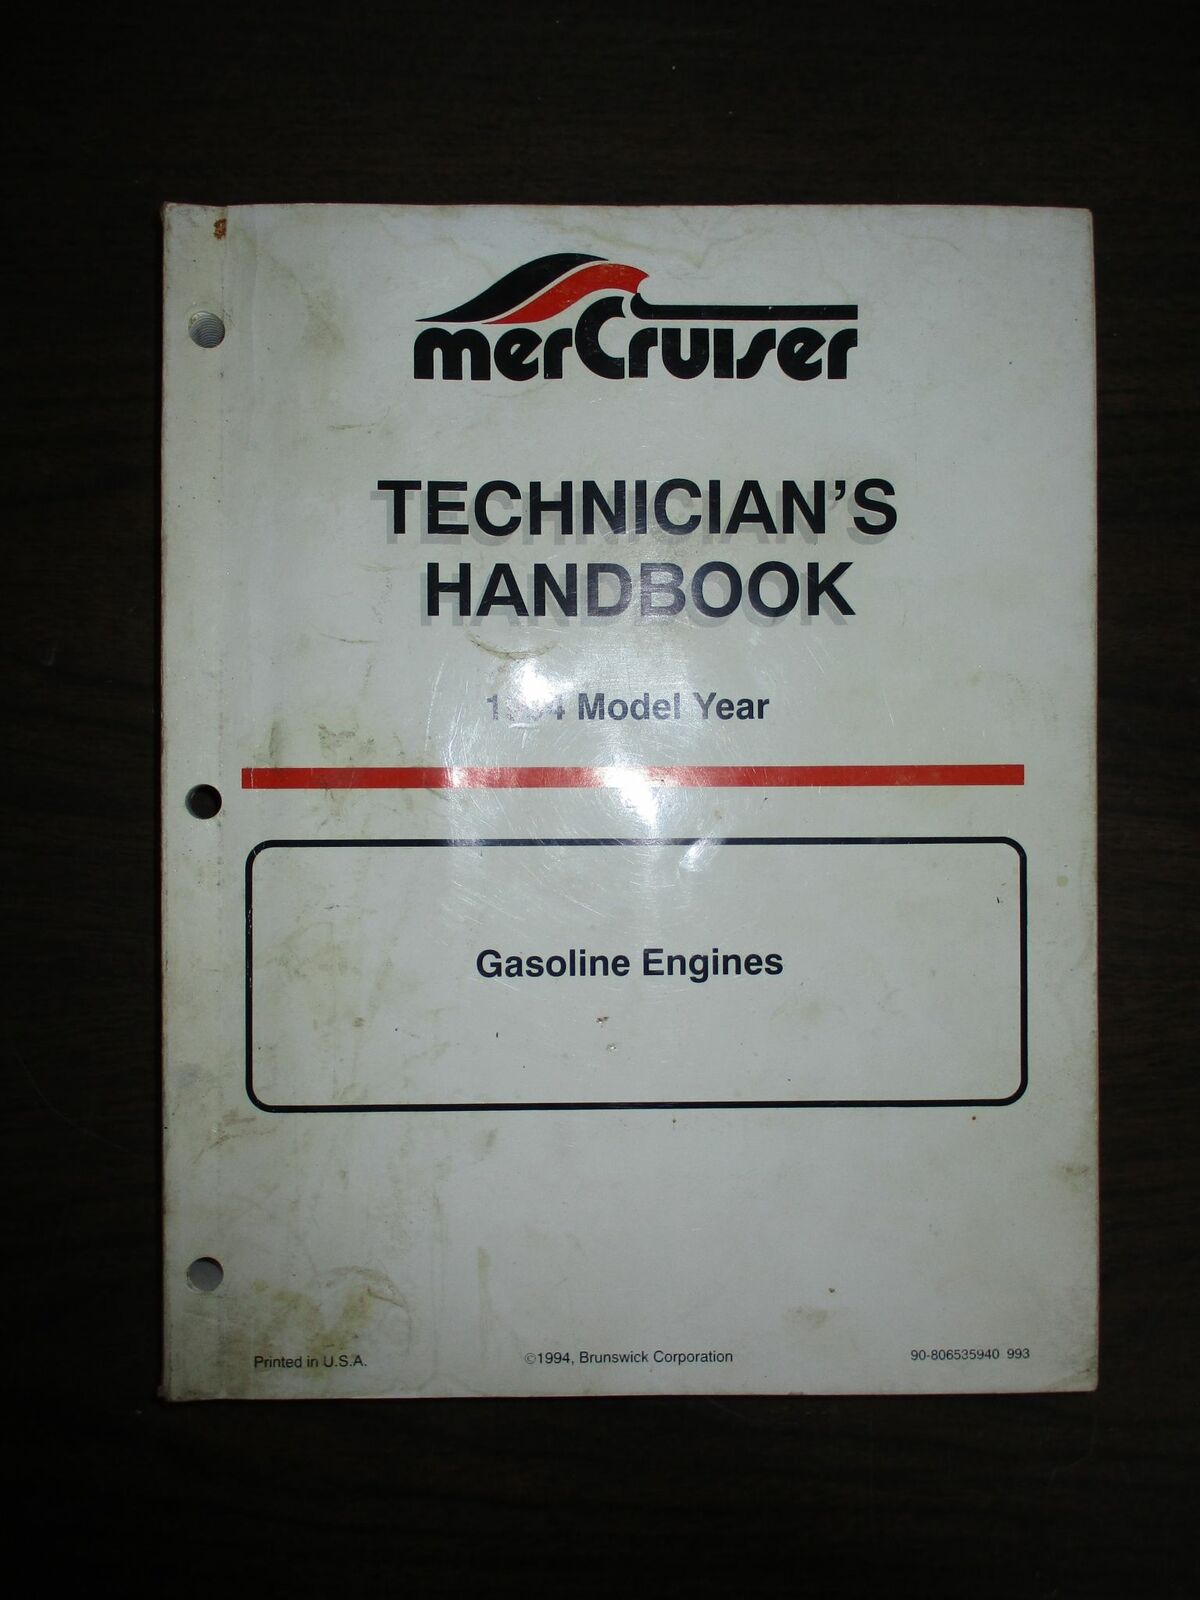 1994 Mercury MerCruiser Technician's Handbook "Gas Engines" [90-806535940]